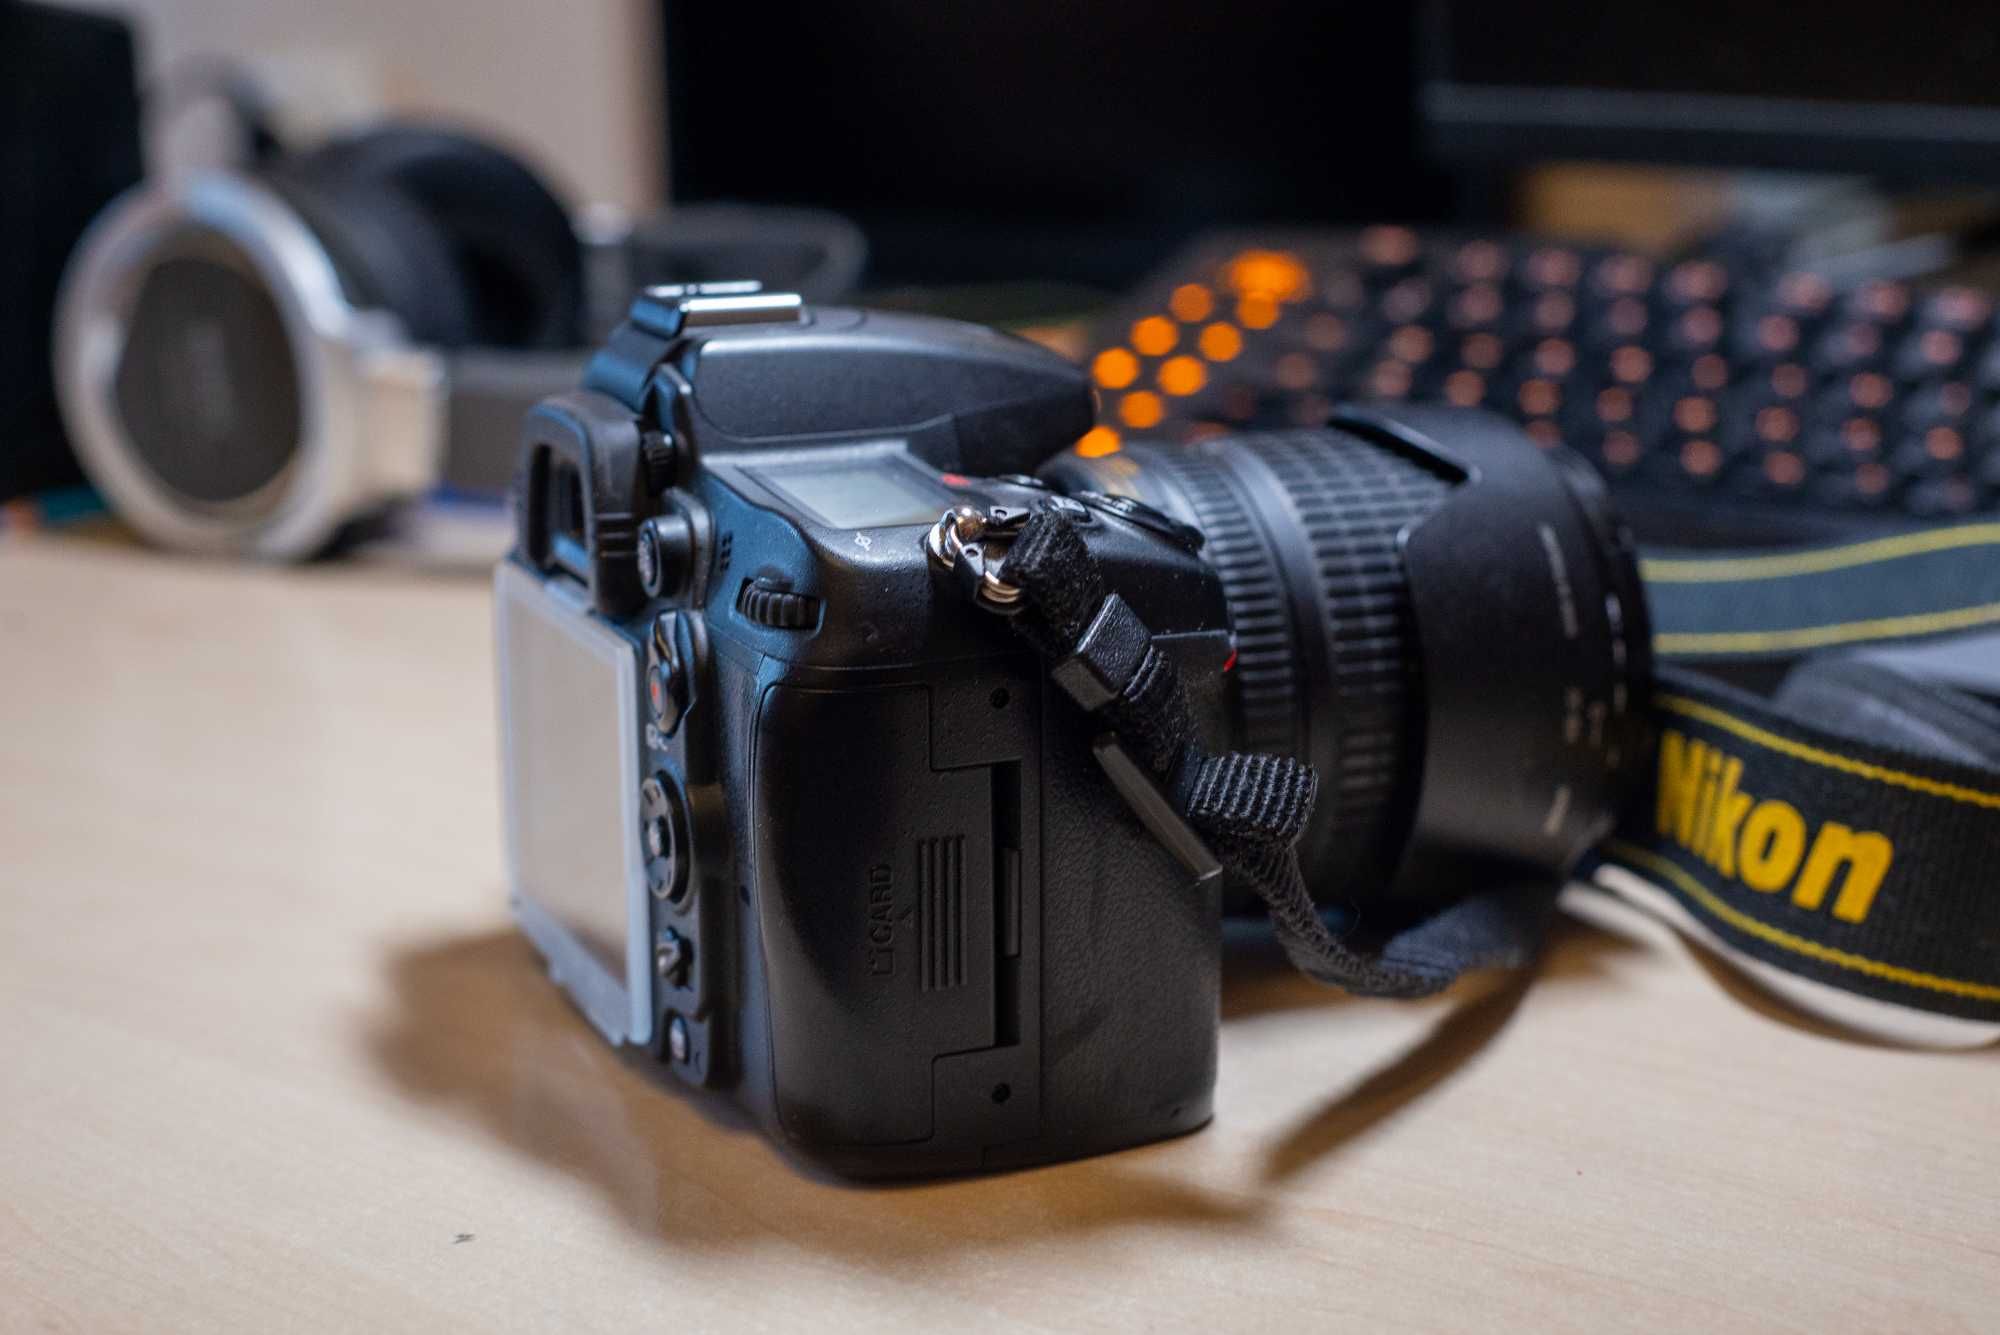 Фотоапарат Nikon D7000 з об’єктивом Nikkor af-s 18-105mm 1:3.5-5.6 ED.